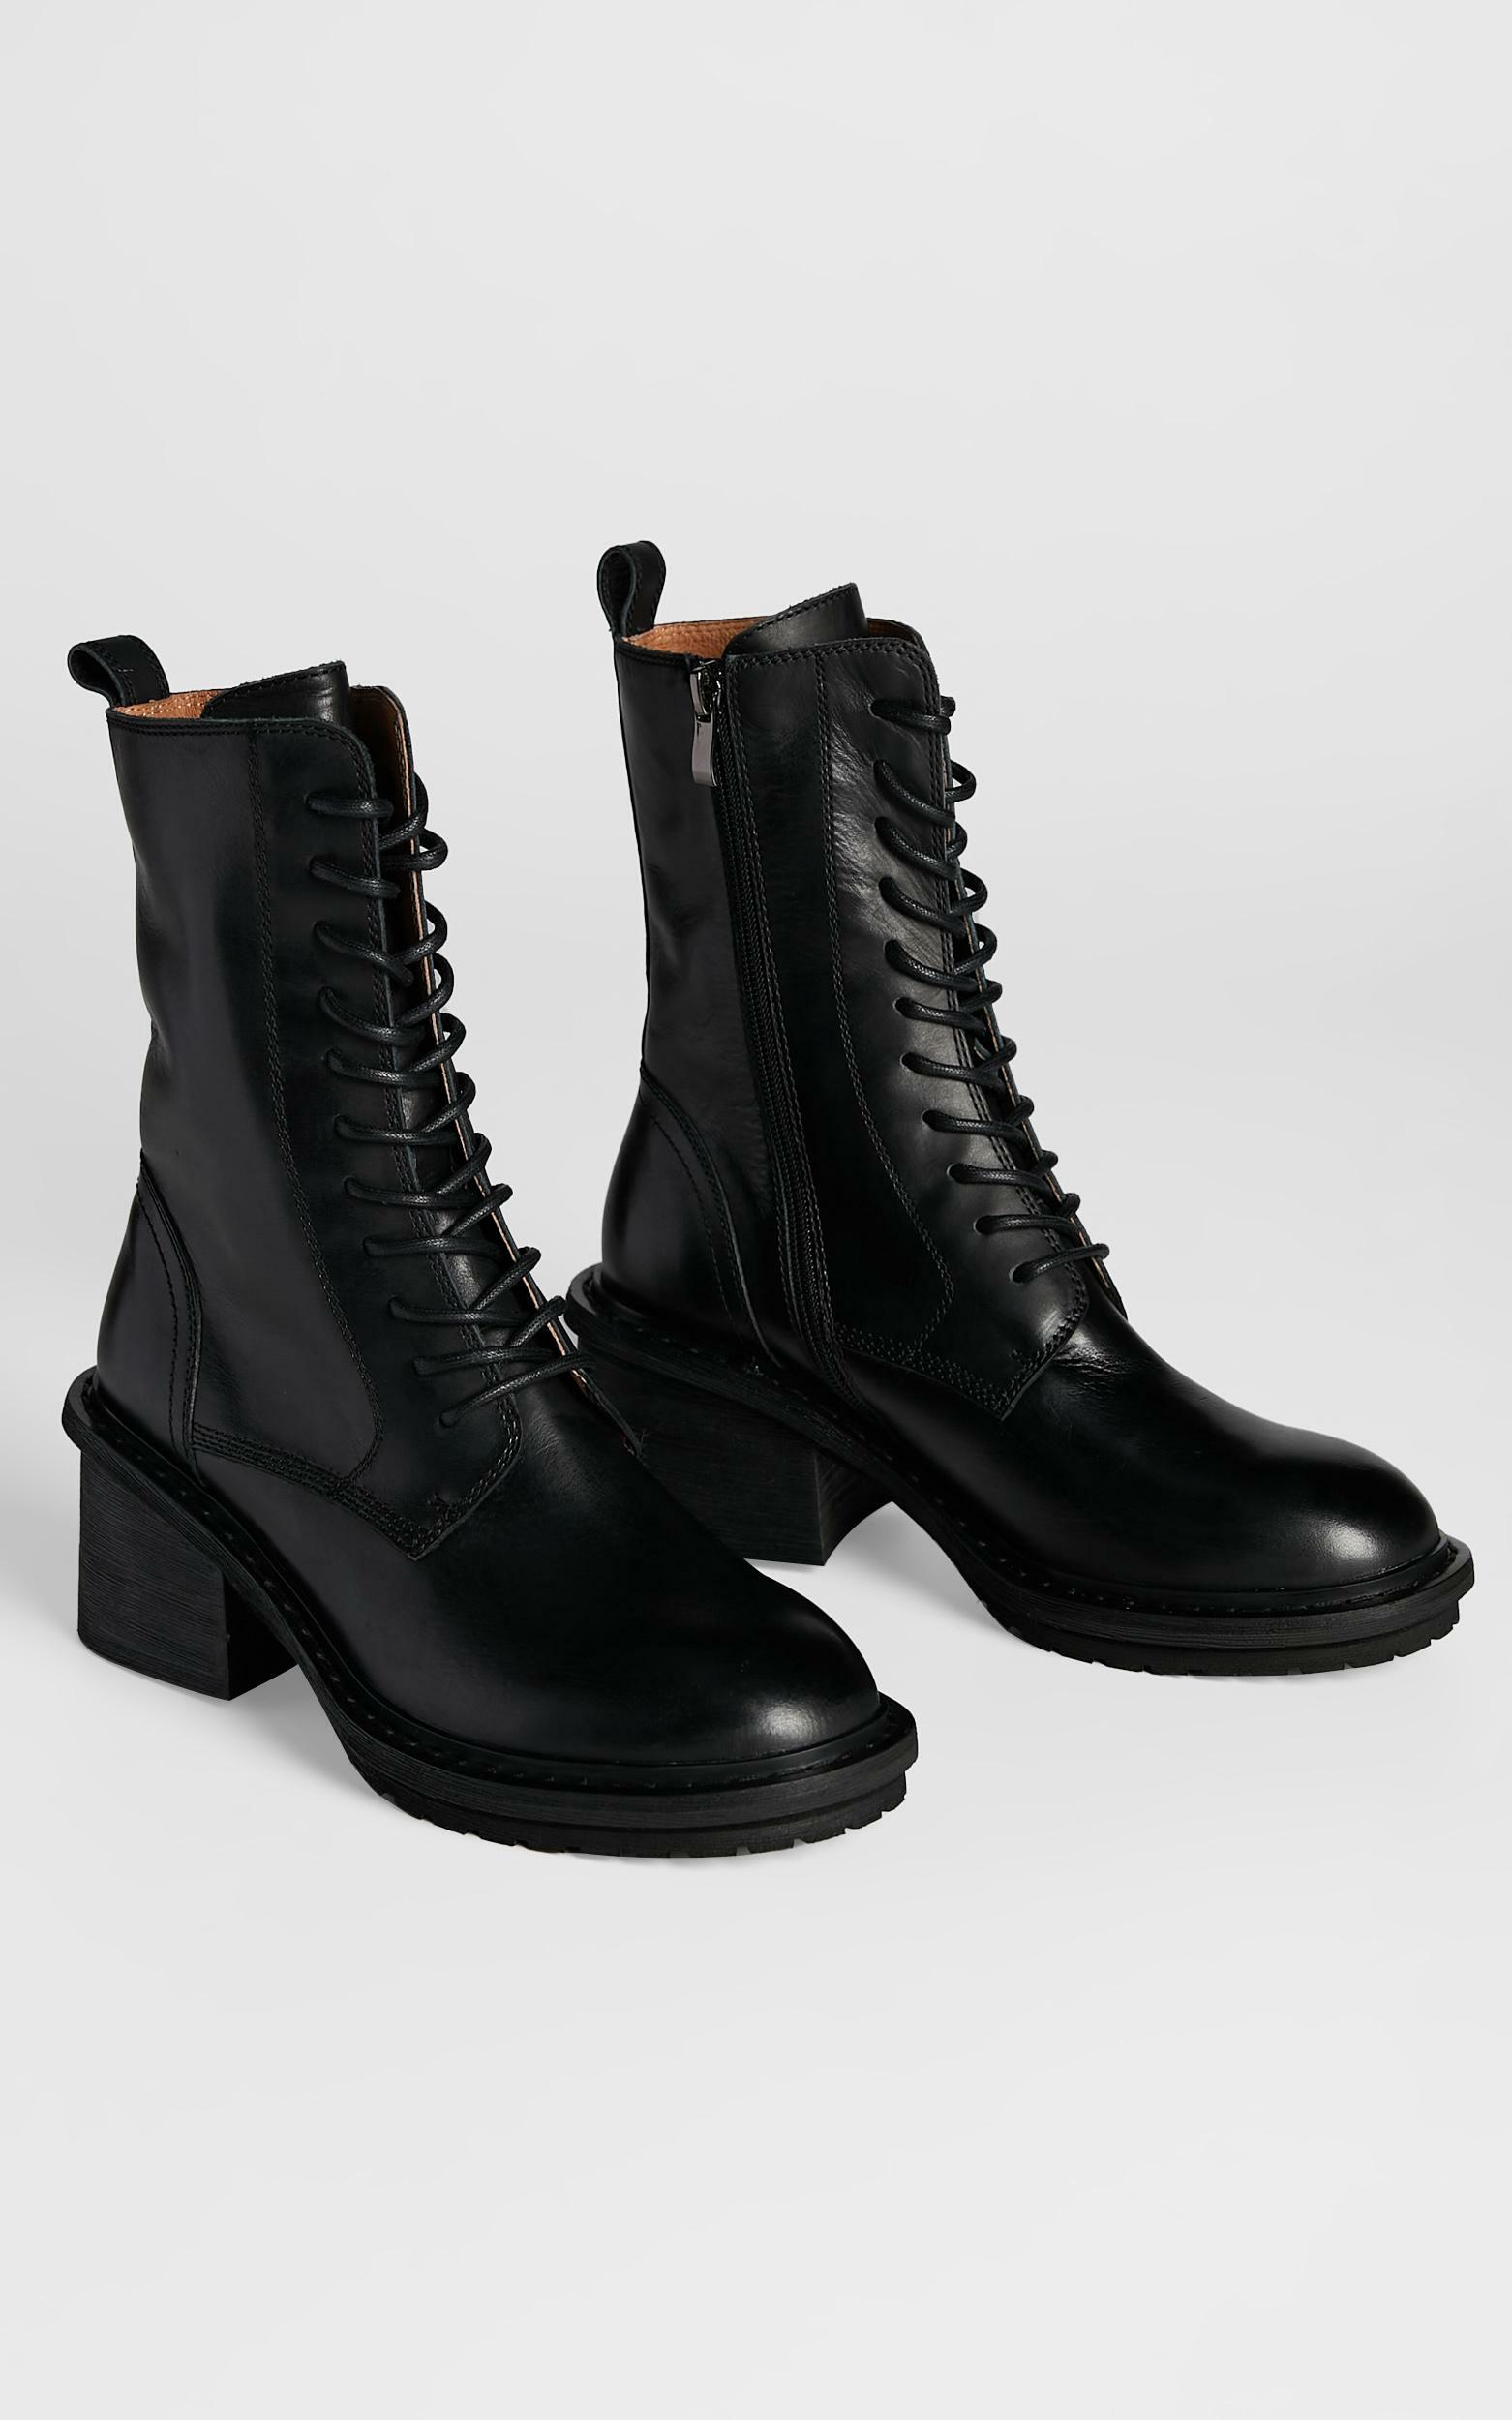 Alias Mae - Mya Boots in Black Burnished | Showpo